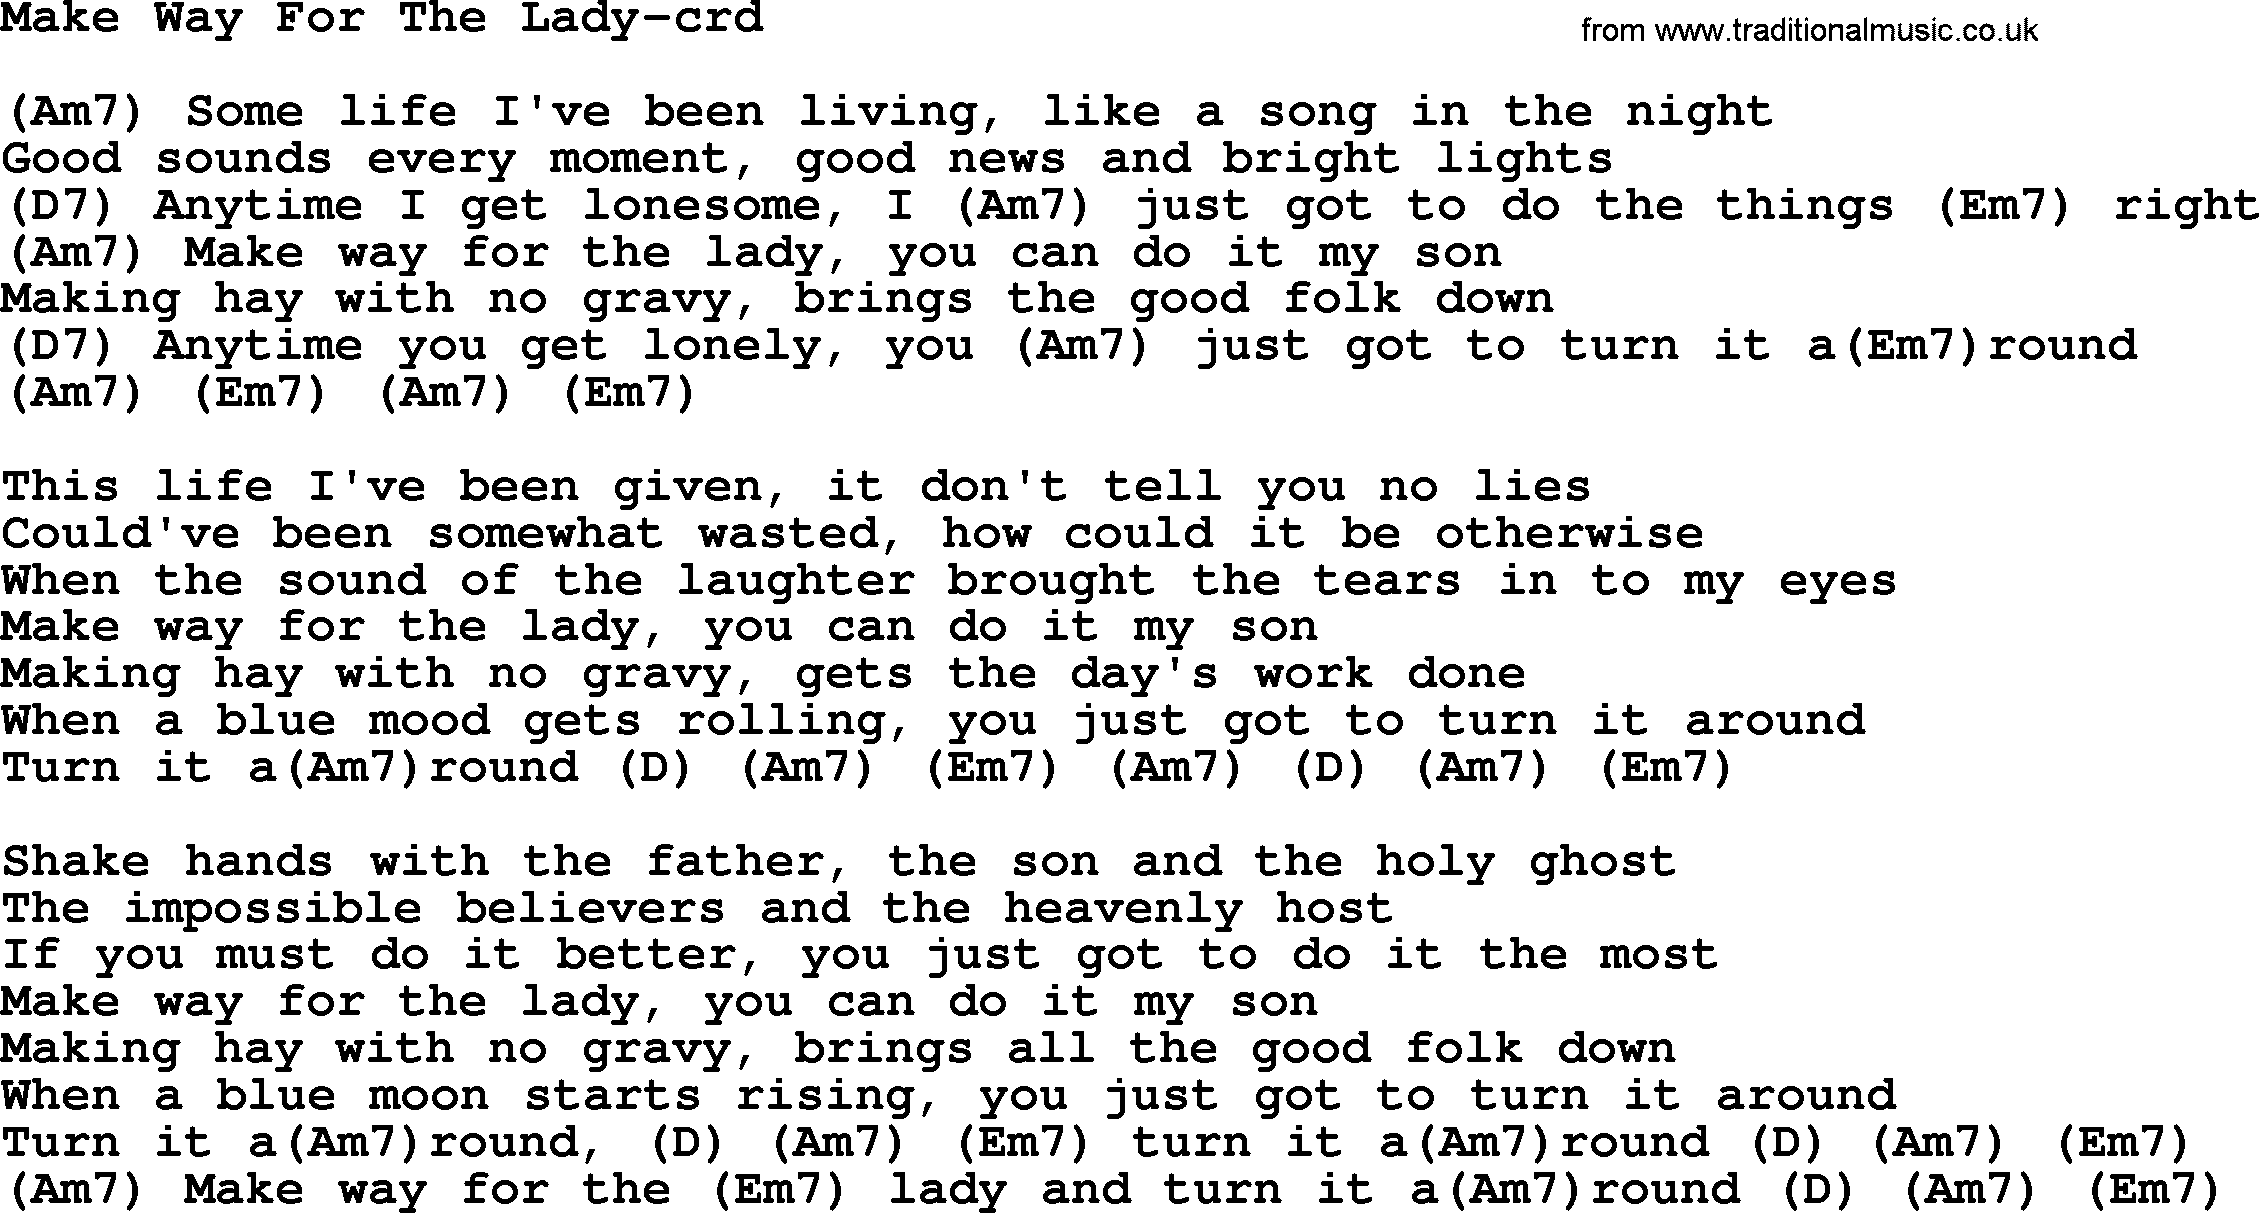 Gordon Lightfoot song Make Way For The Lady, lyrics and chords